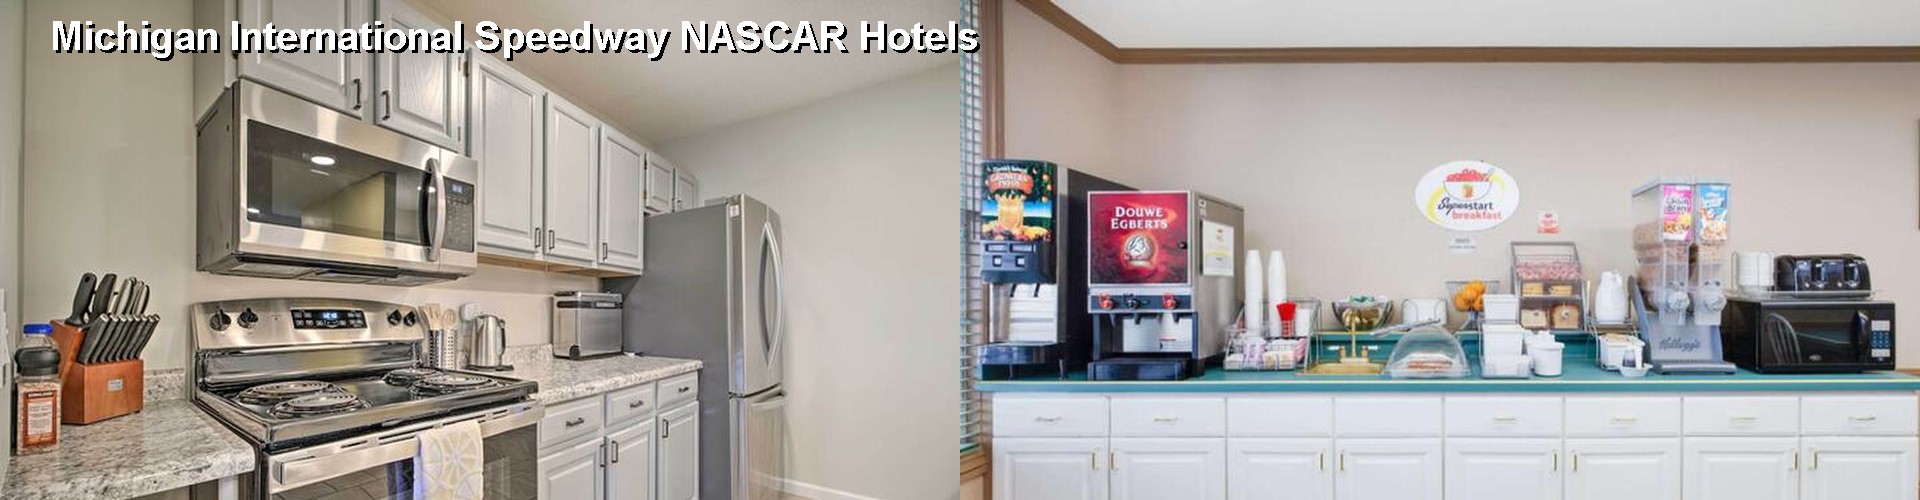 3 Best Hotels near Michigan International Speedway NASCAR